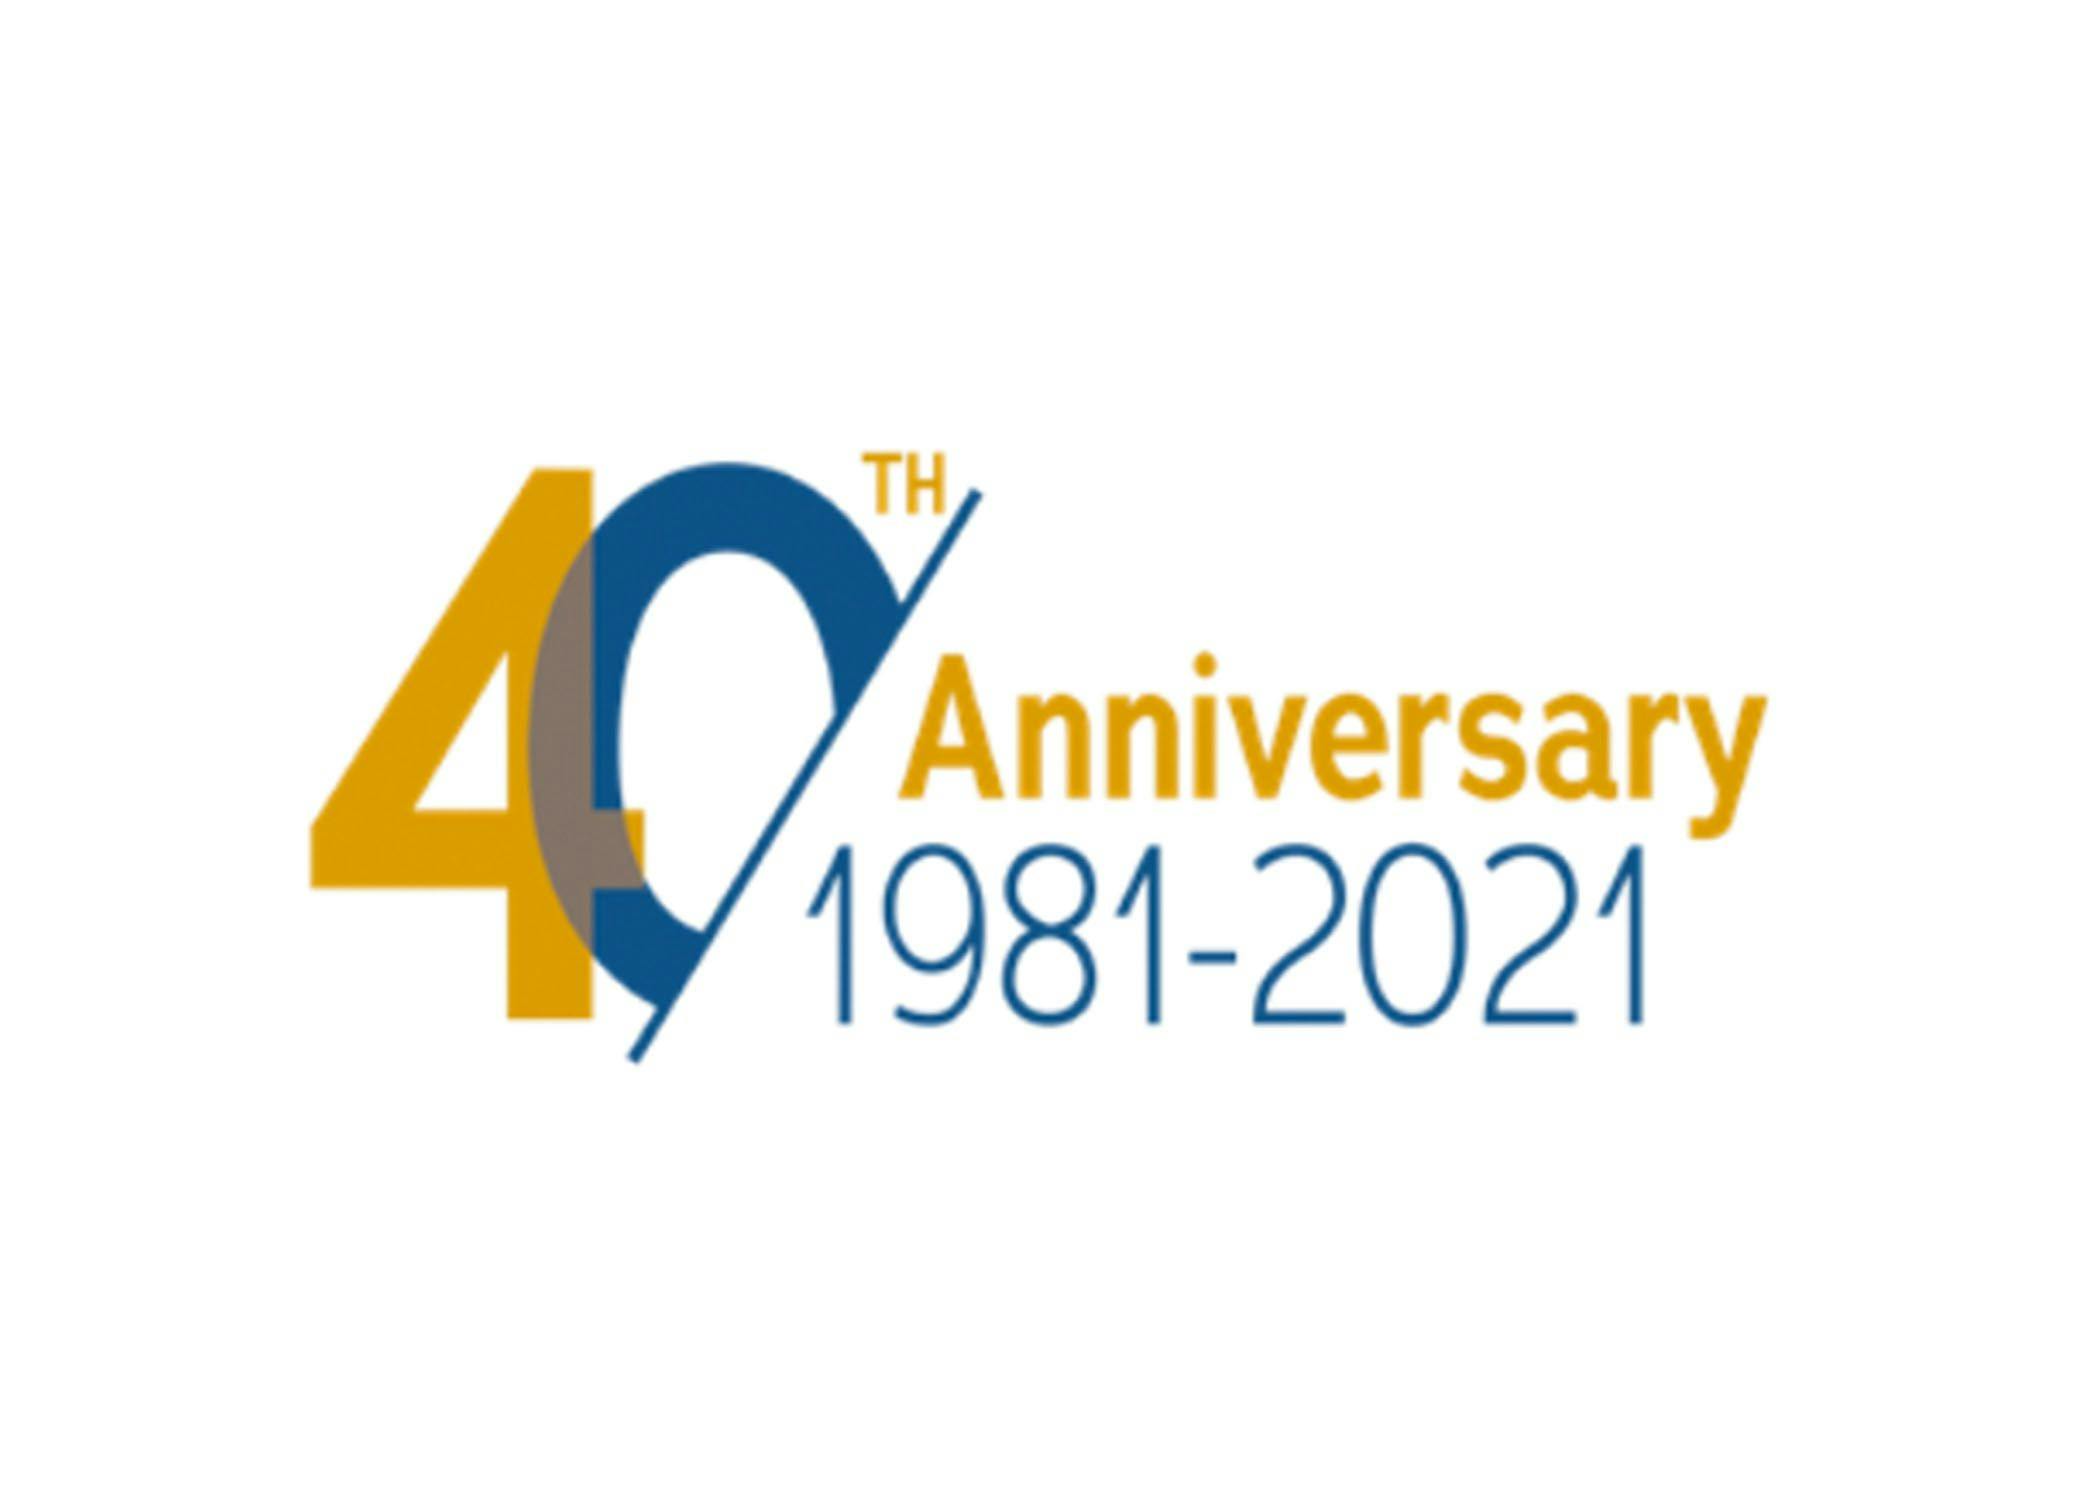 Pharm Exec at 40 (2000-2002)